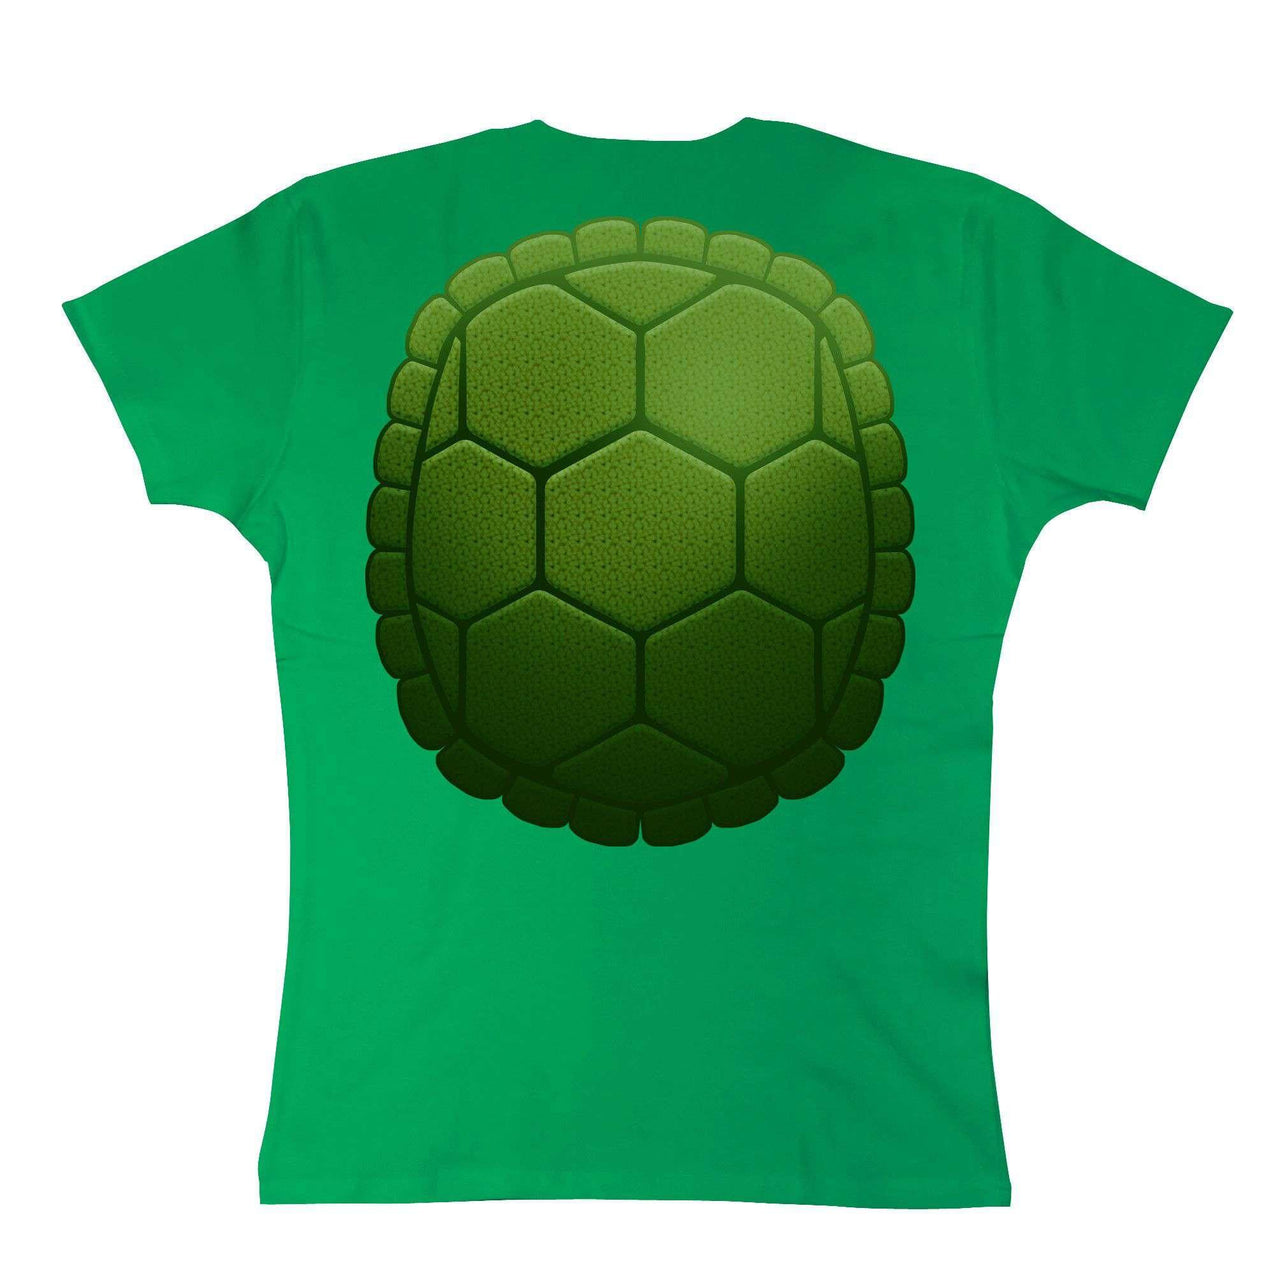 Fancy Dress Ninja Turtle Womens T-Shirt 8Ball